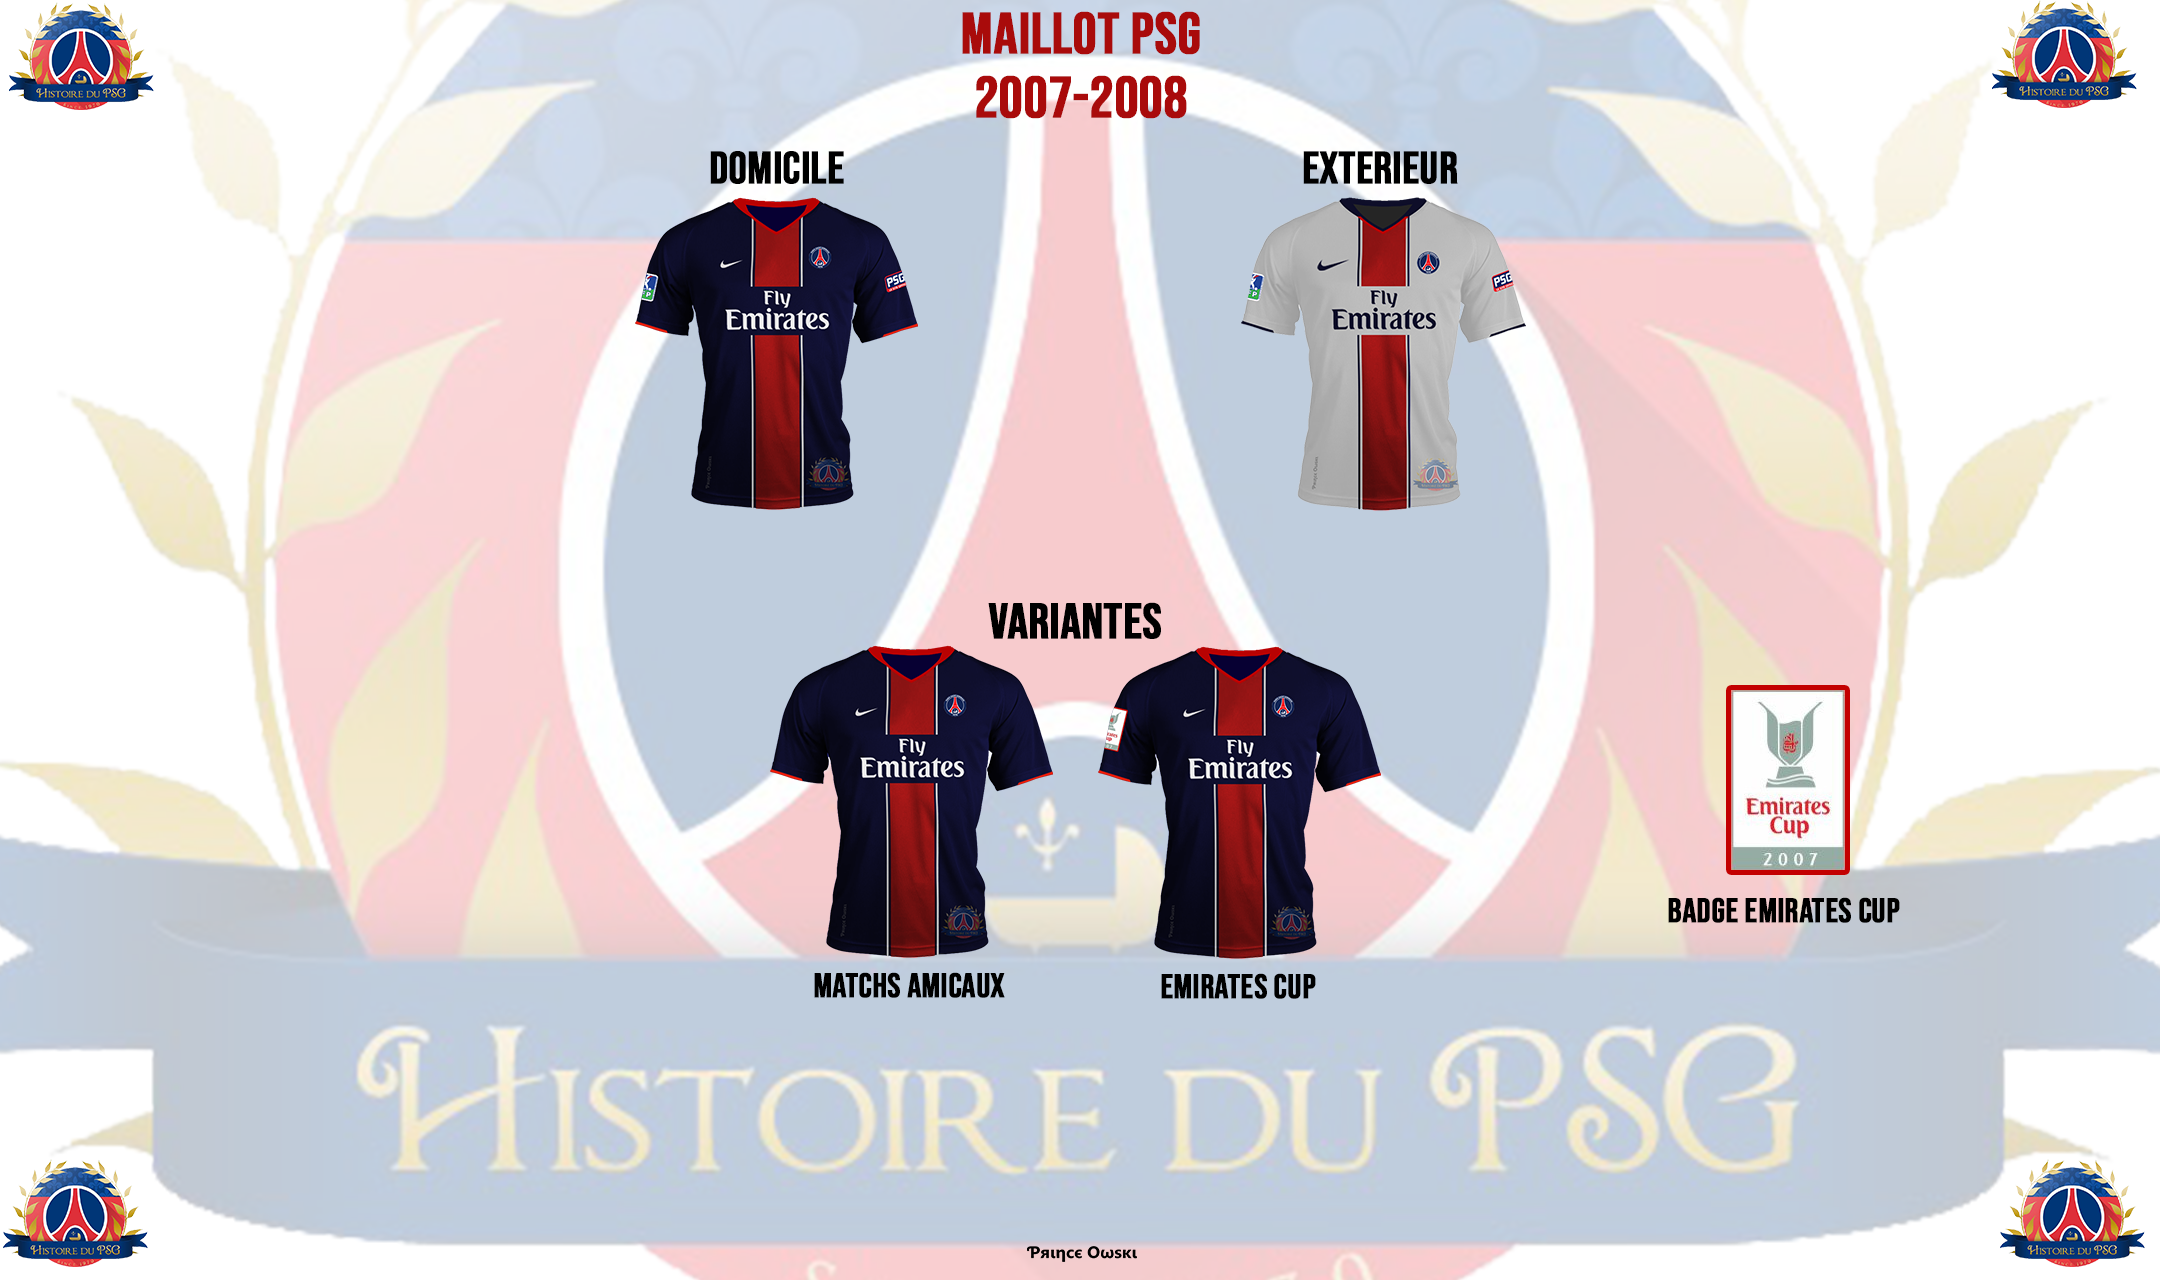 Maillot PSG 2007-2008